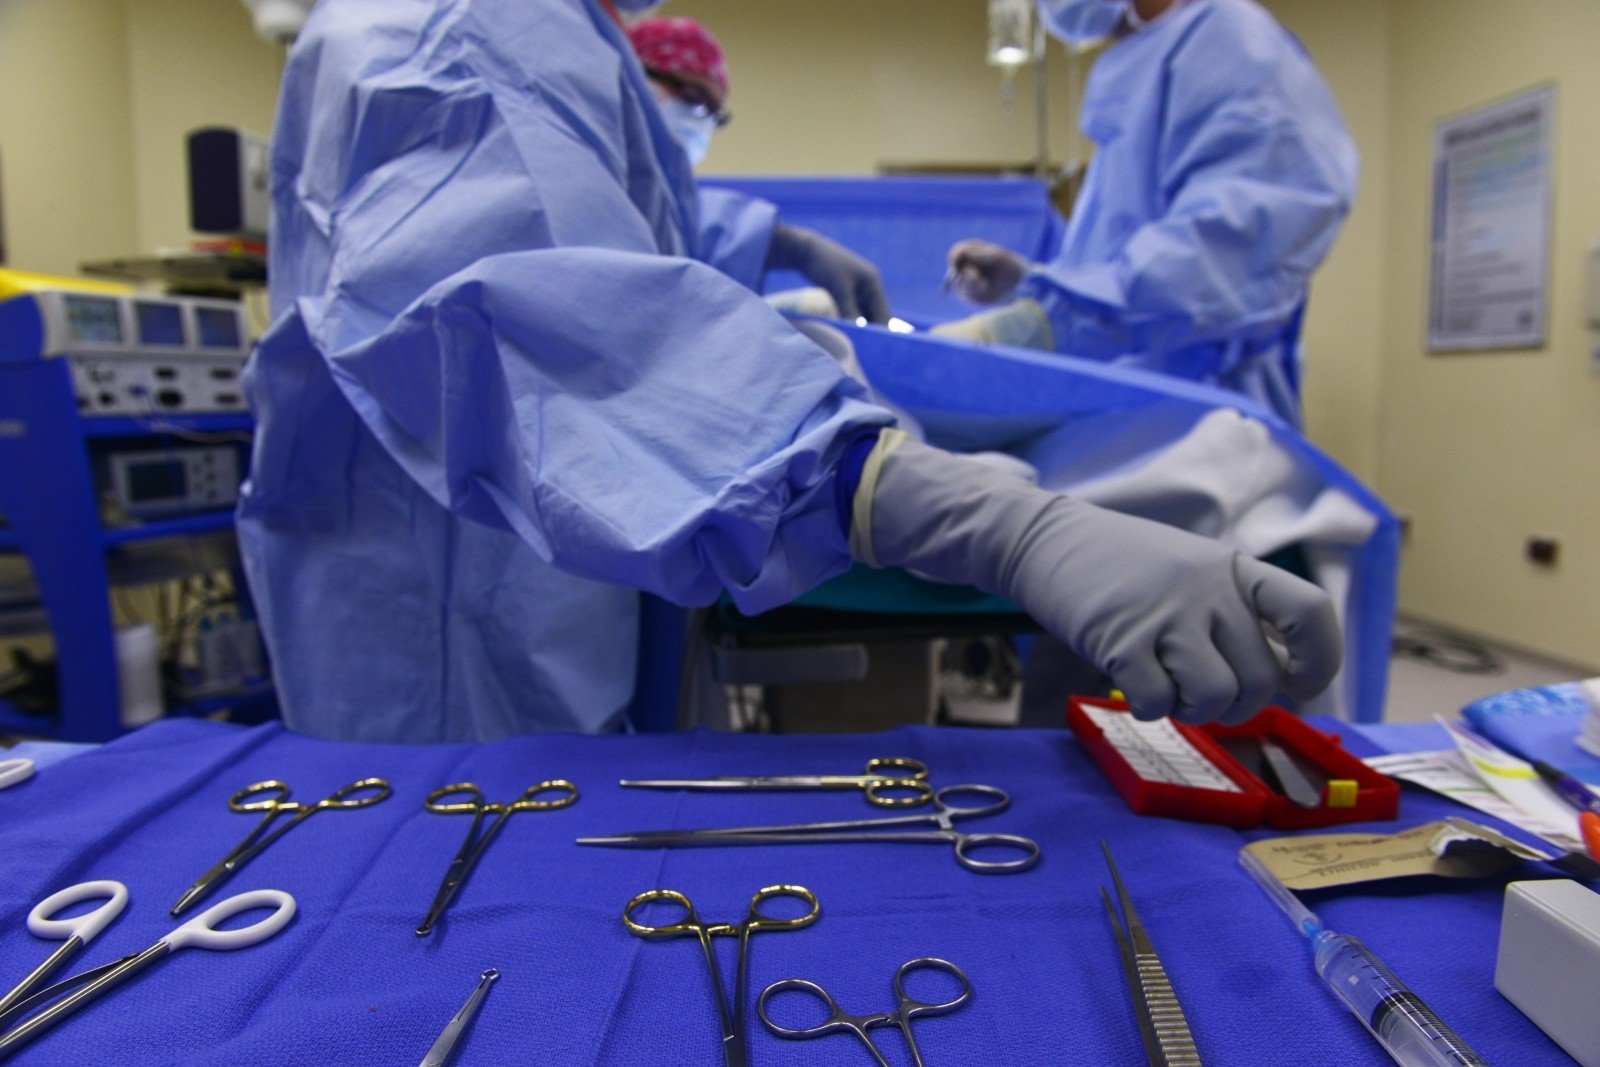 surgery-instruments-surgeons-operation-medical.jpg